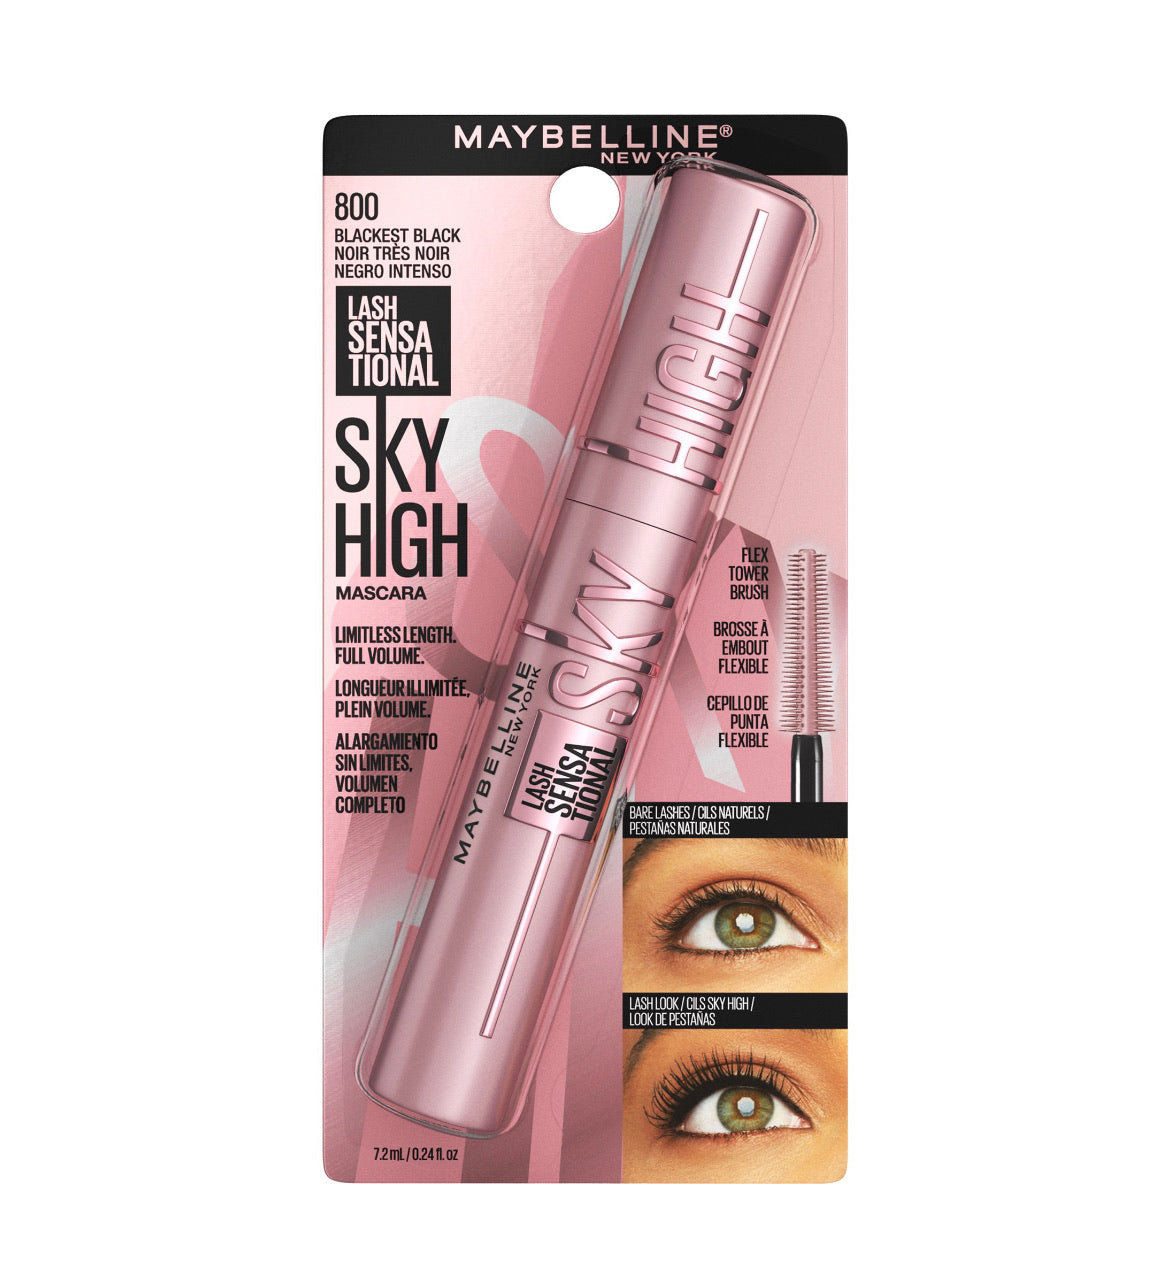 Maybelline Lash Sensational Sky High Washable Mascara Makeup - Blackest Black